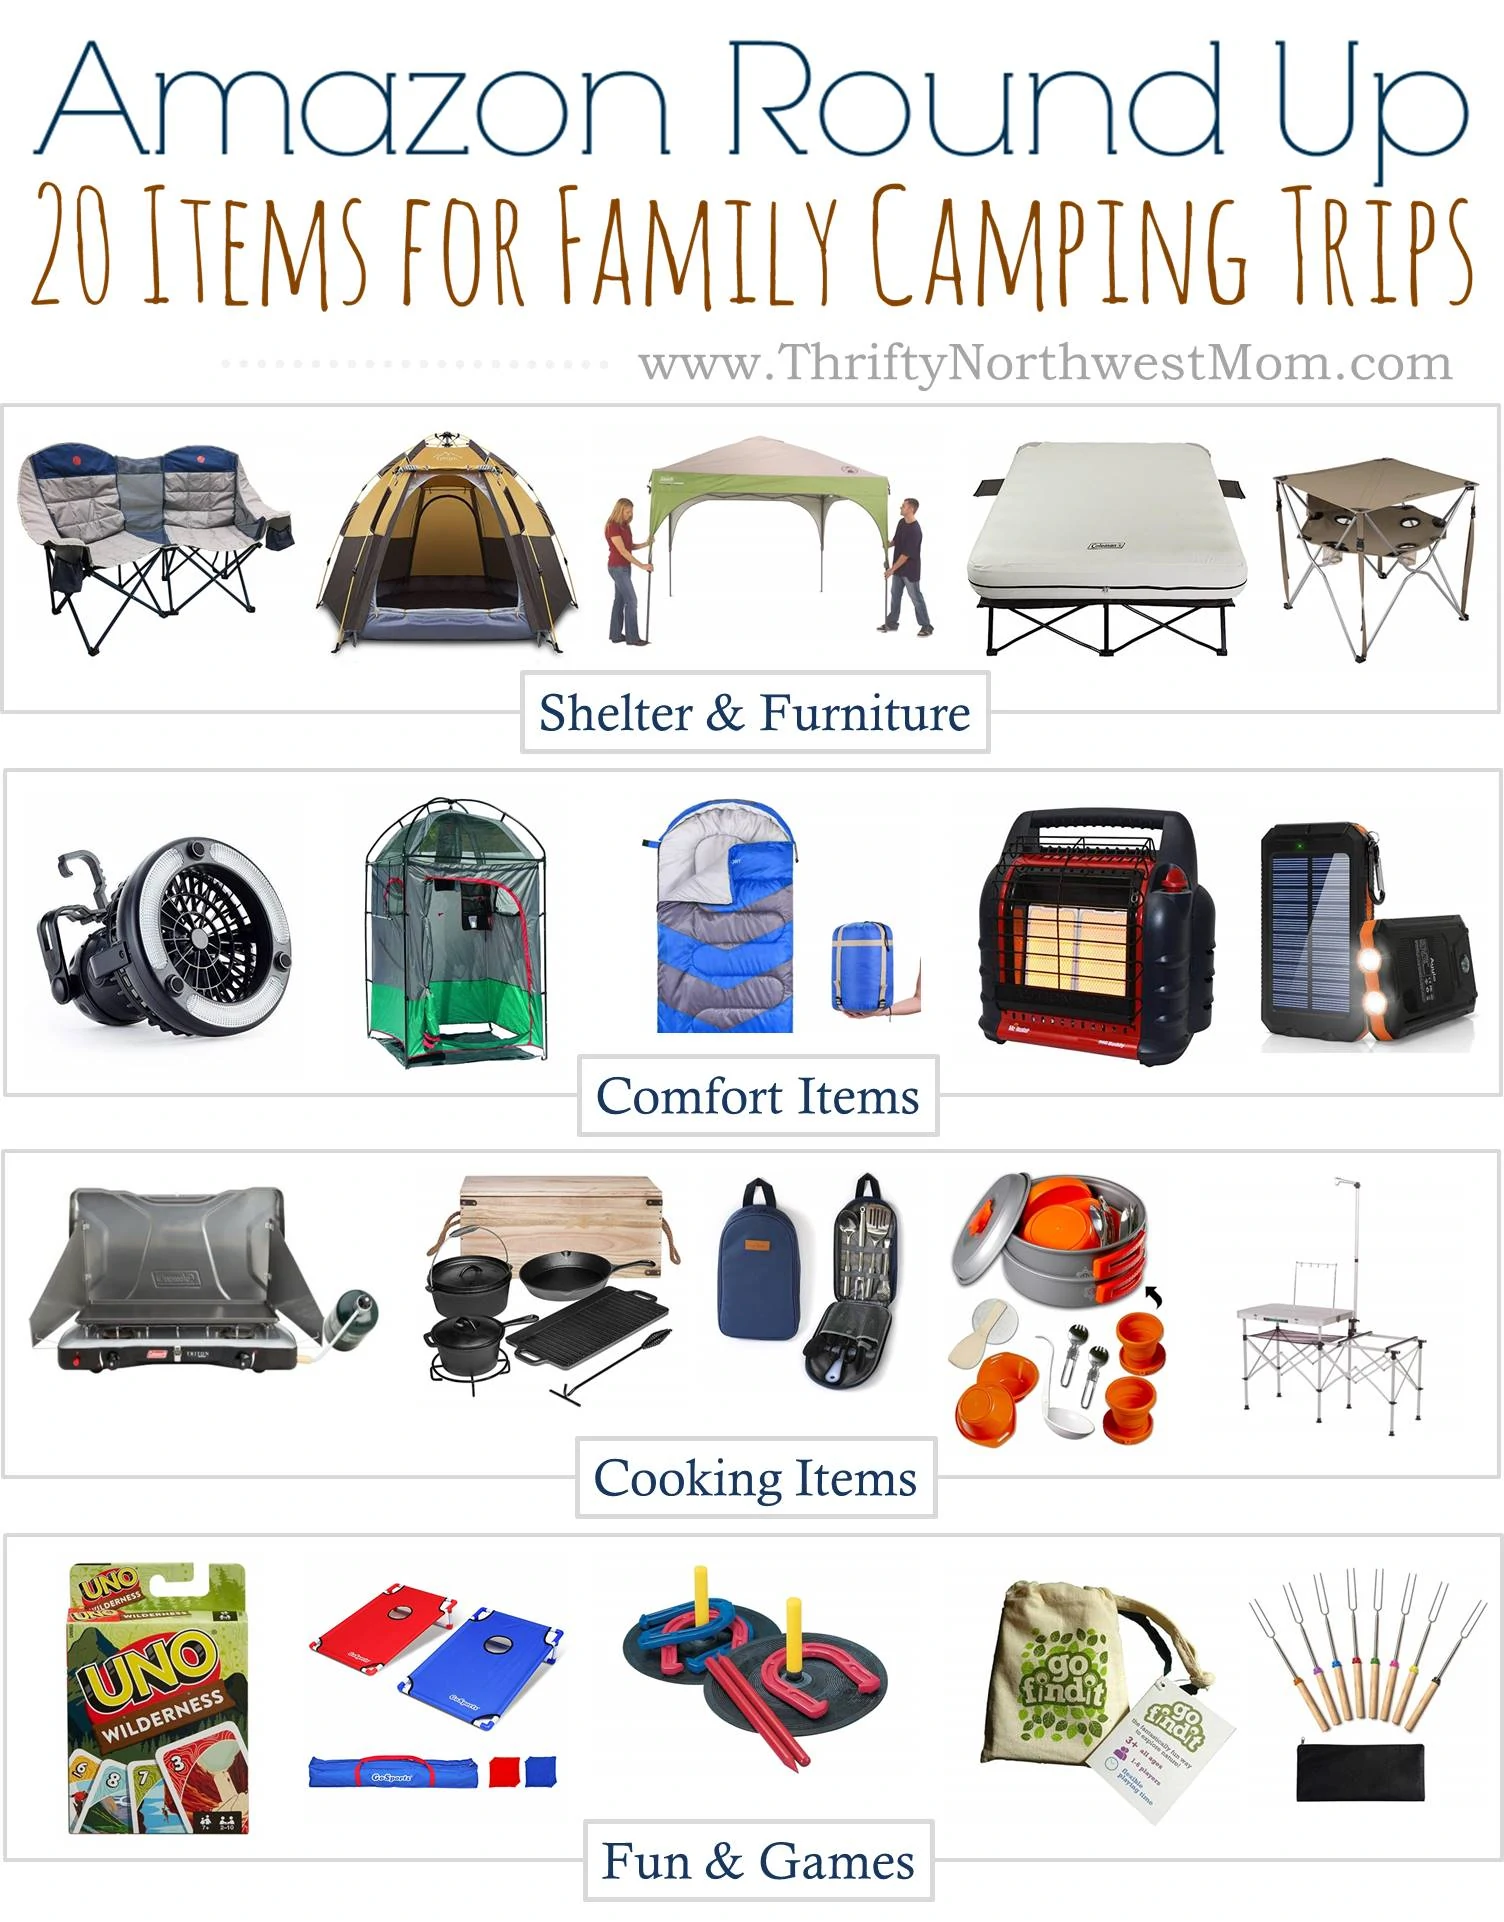 https://www.thriftynorthwestmom.com/wp-content/uploads/2019/03/3.17-Amazon-Round-Up-Camping-Items-NWMOM.webp